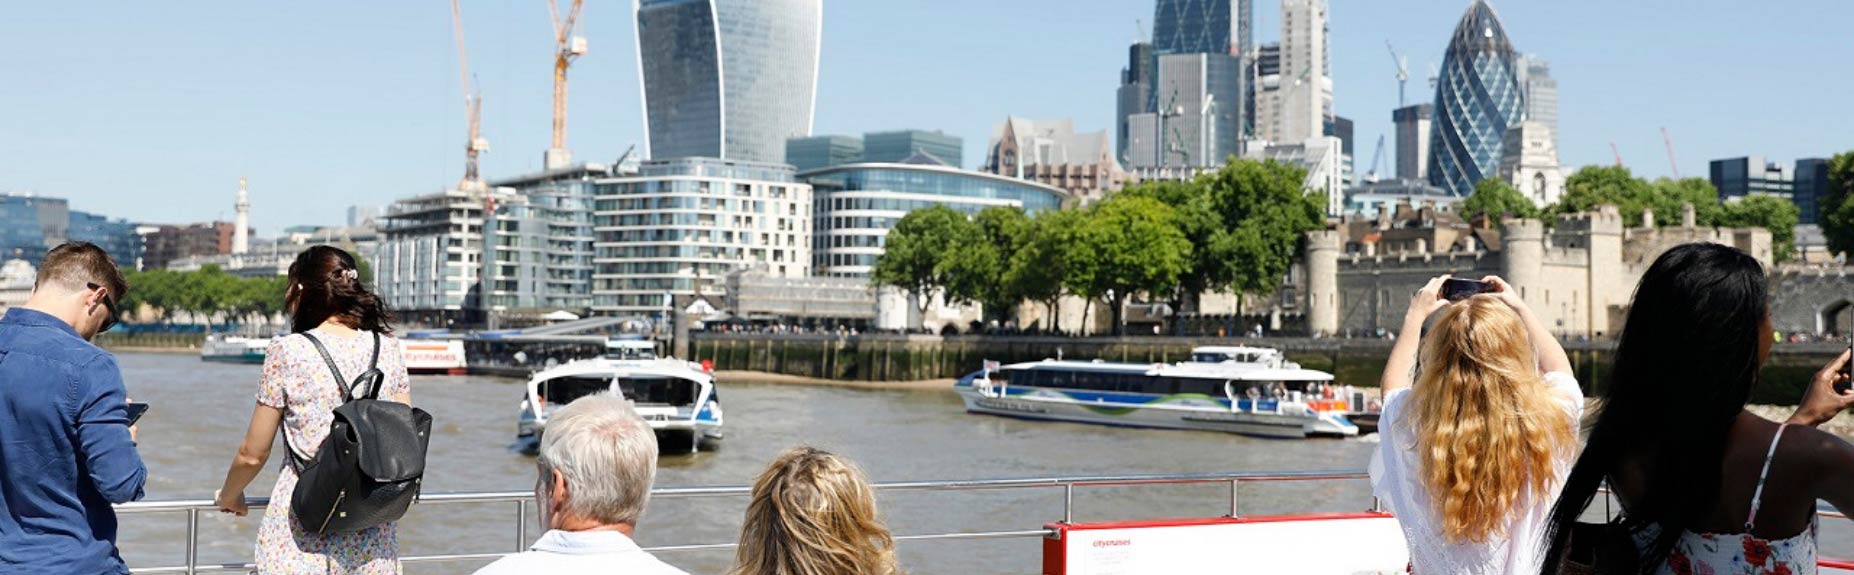 Folk på båddæk på Themsen og London i baggrunden